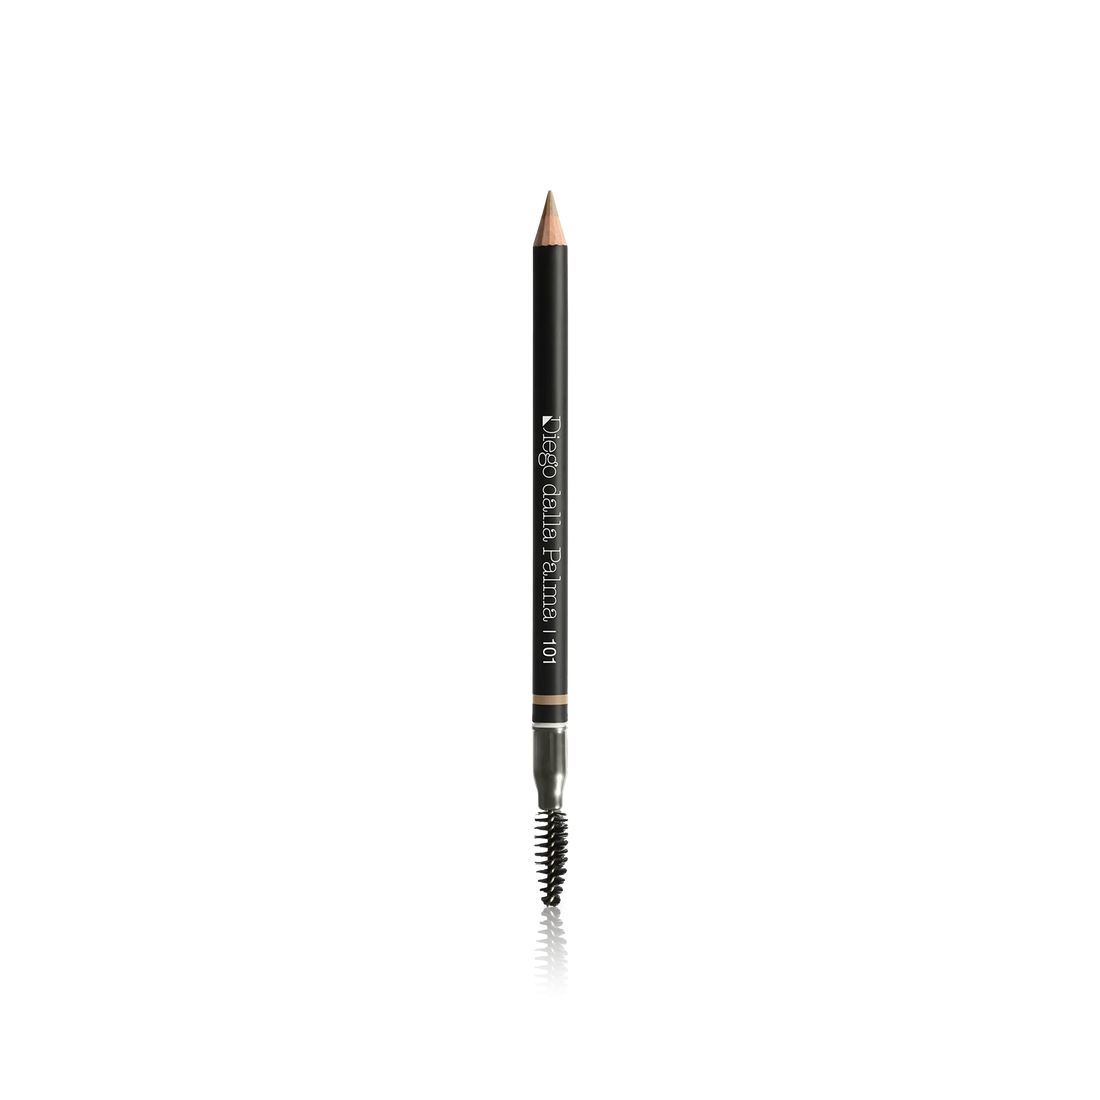 The Brow Studio Eyebrow Pencil